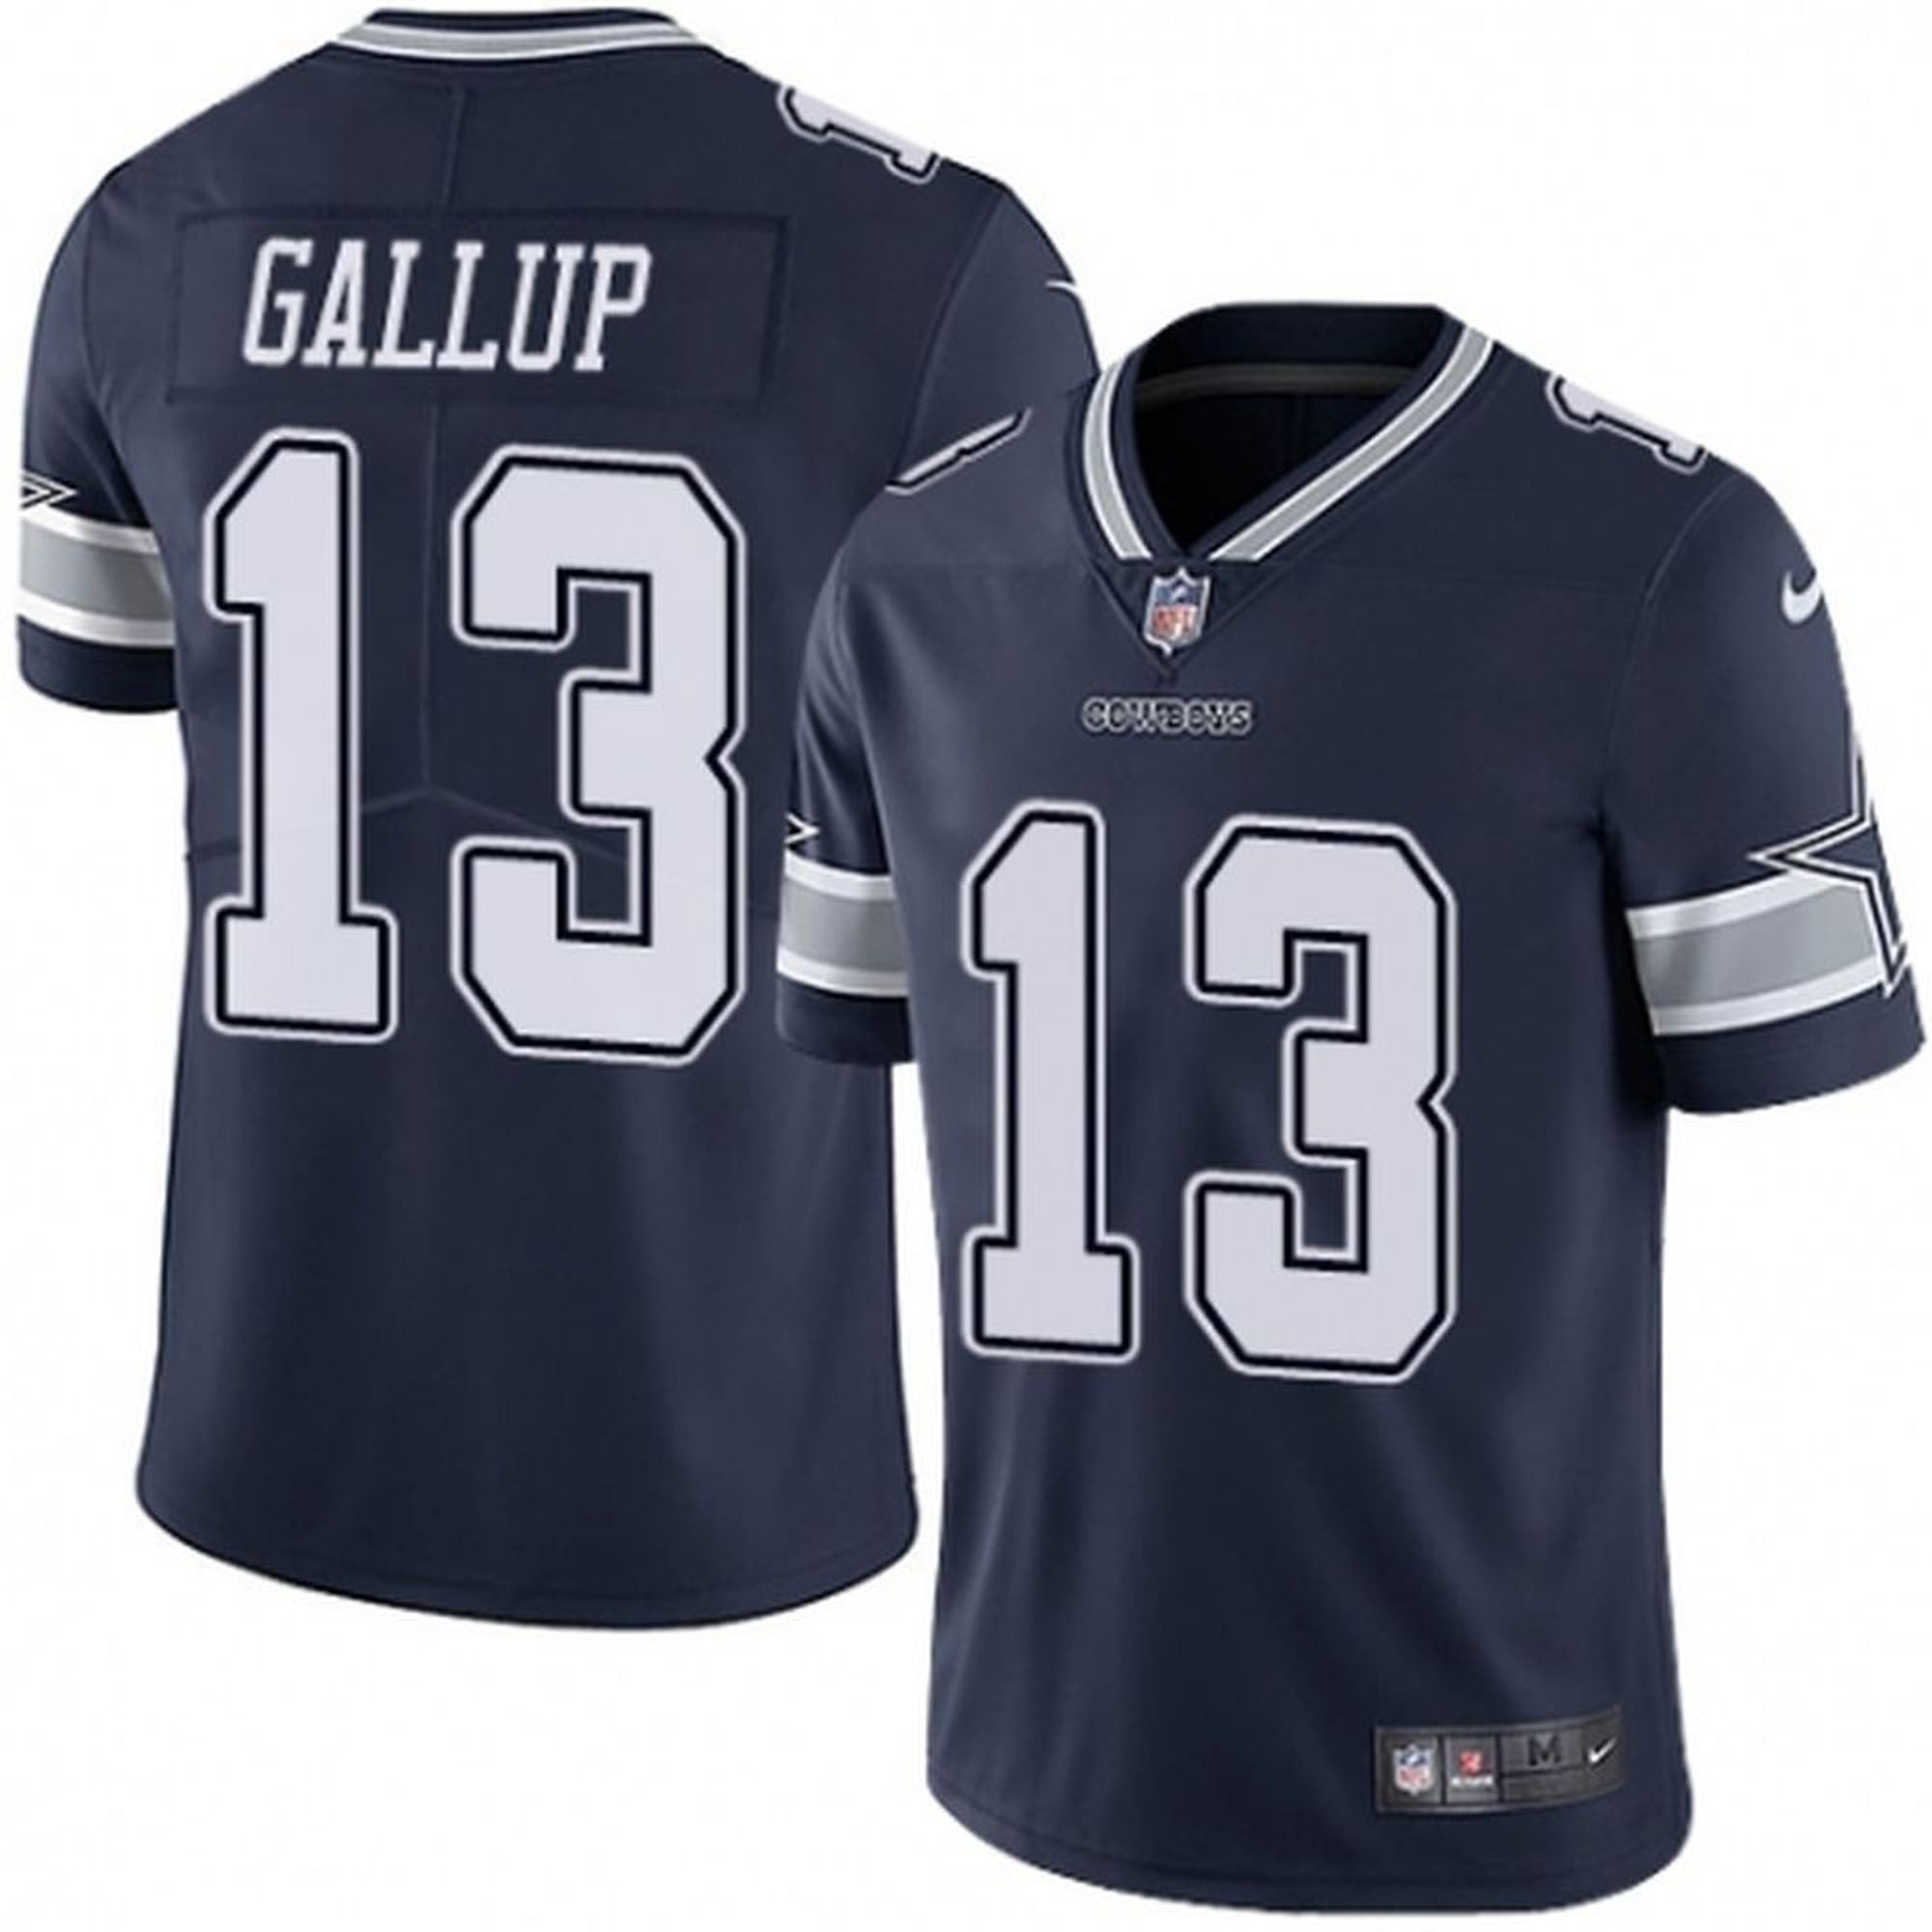 NWT Dallas Cowboys NFL On Field Jersey #13 Gallup